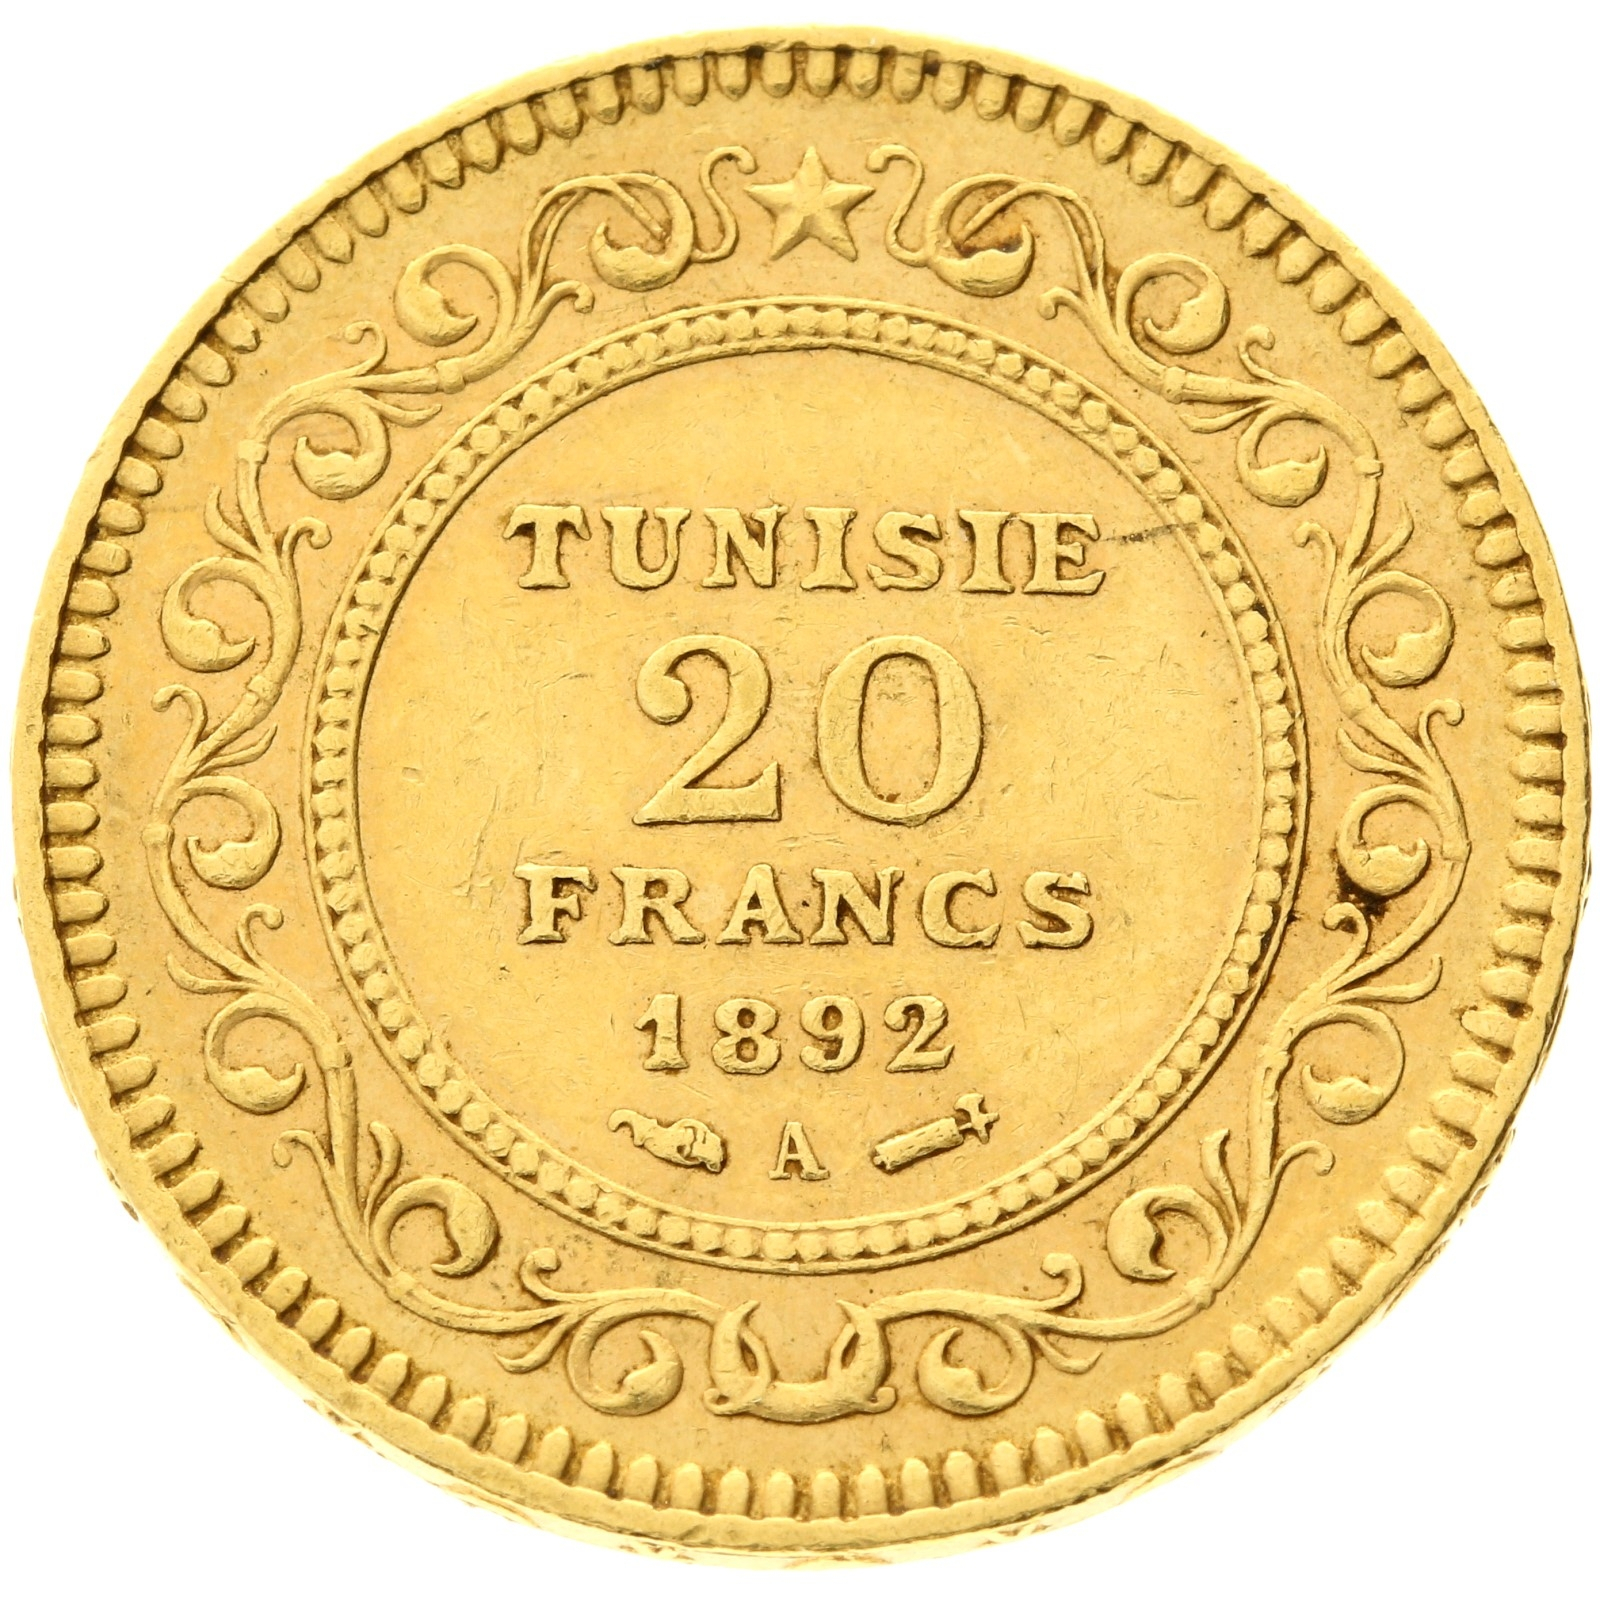 Tunisia - 20 francs - 1892 - A - Ali Bey 